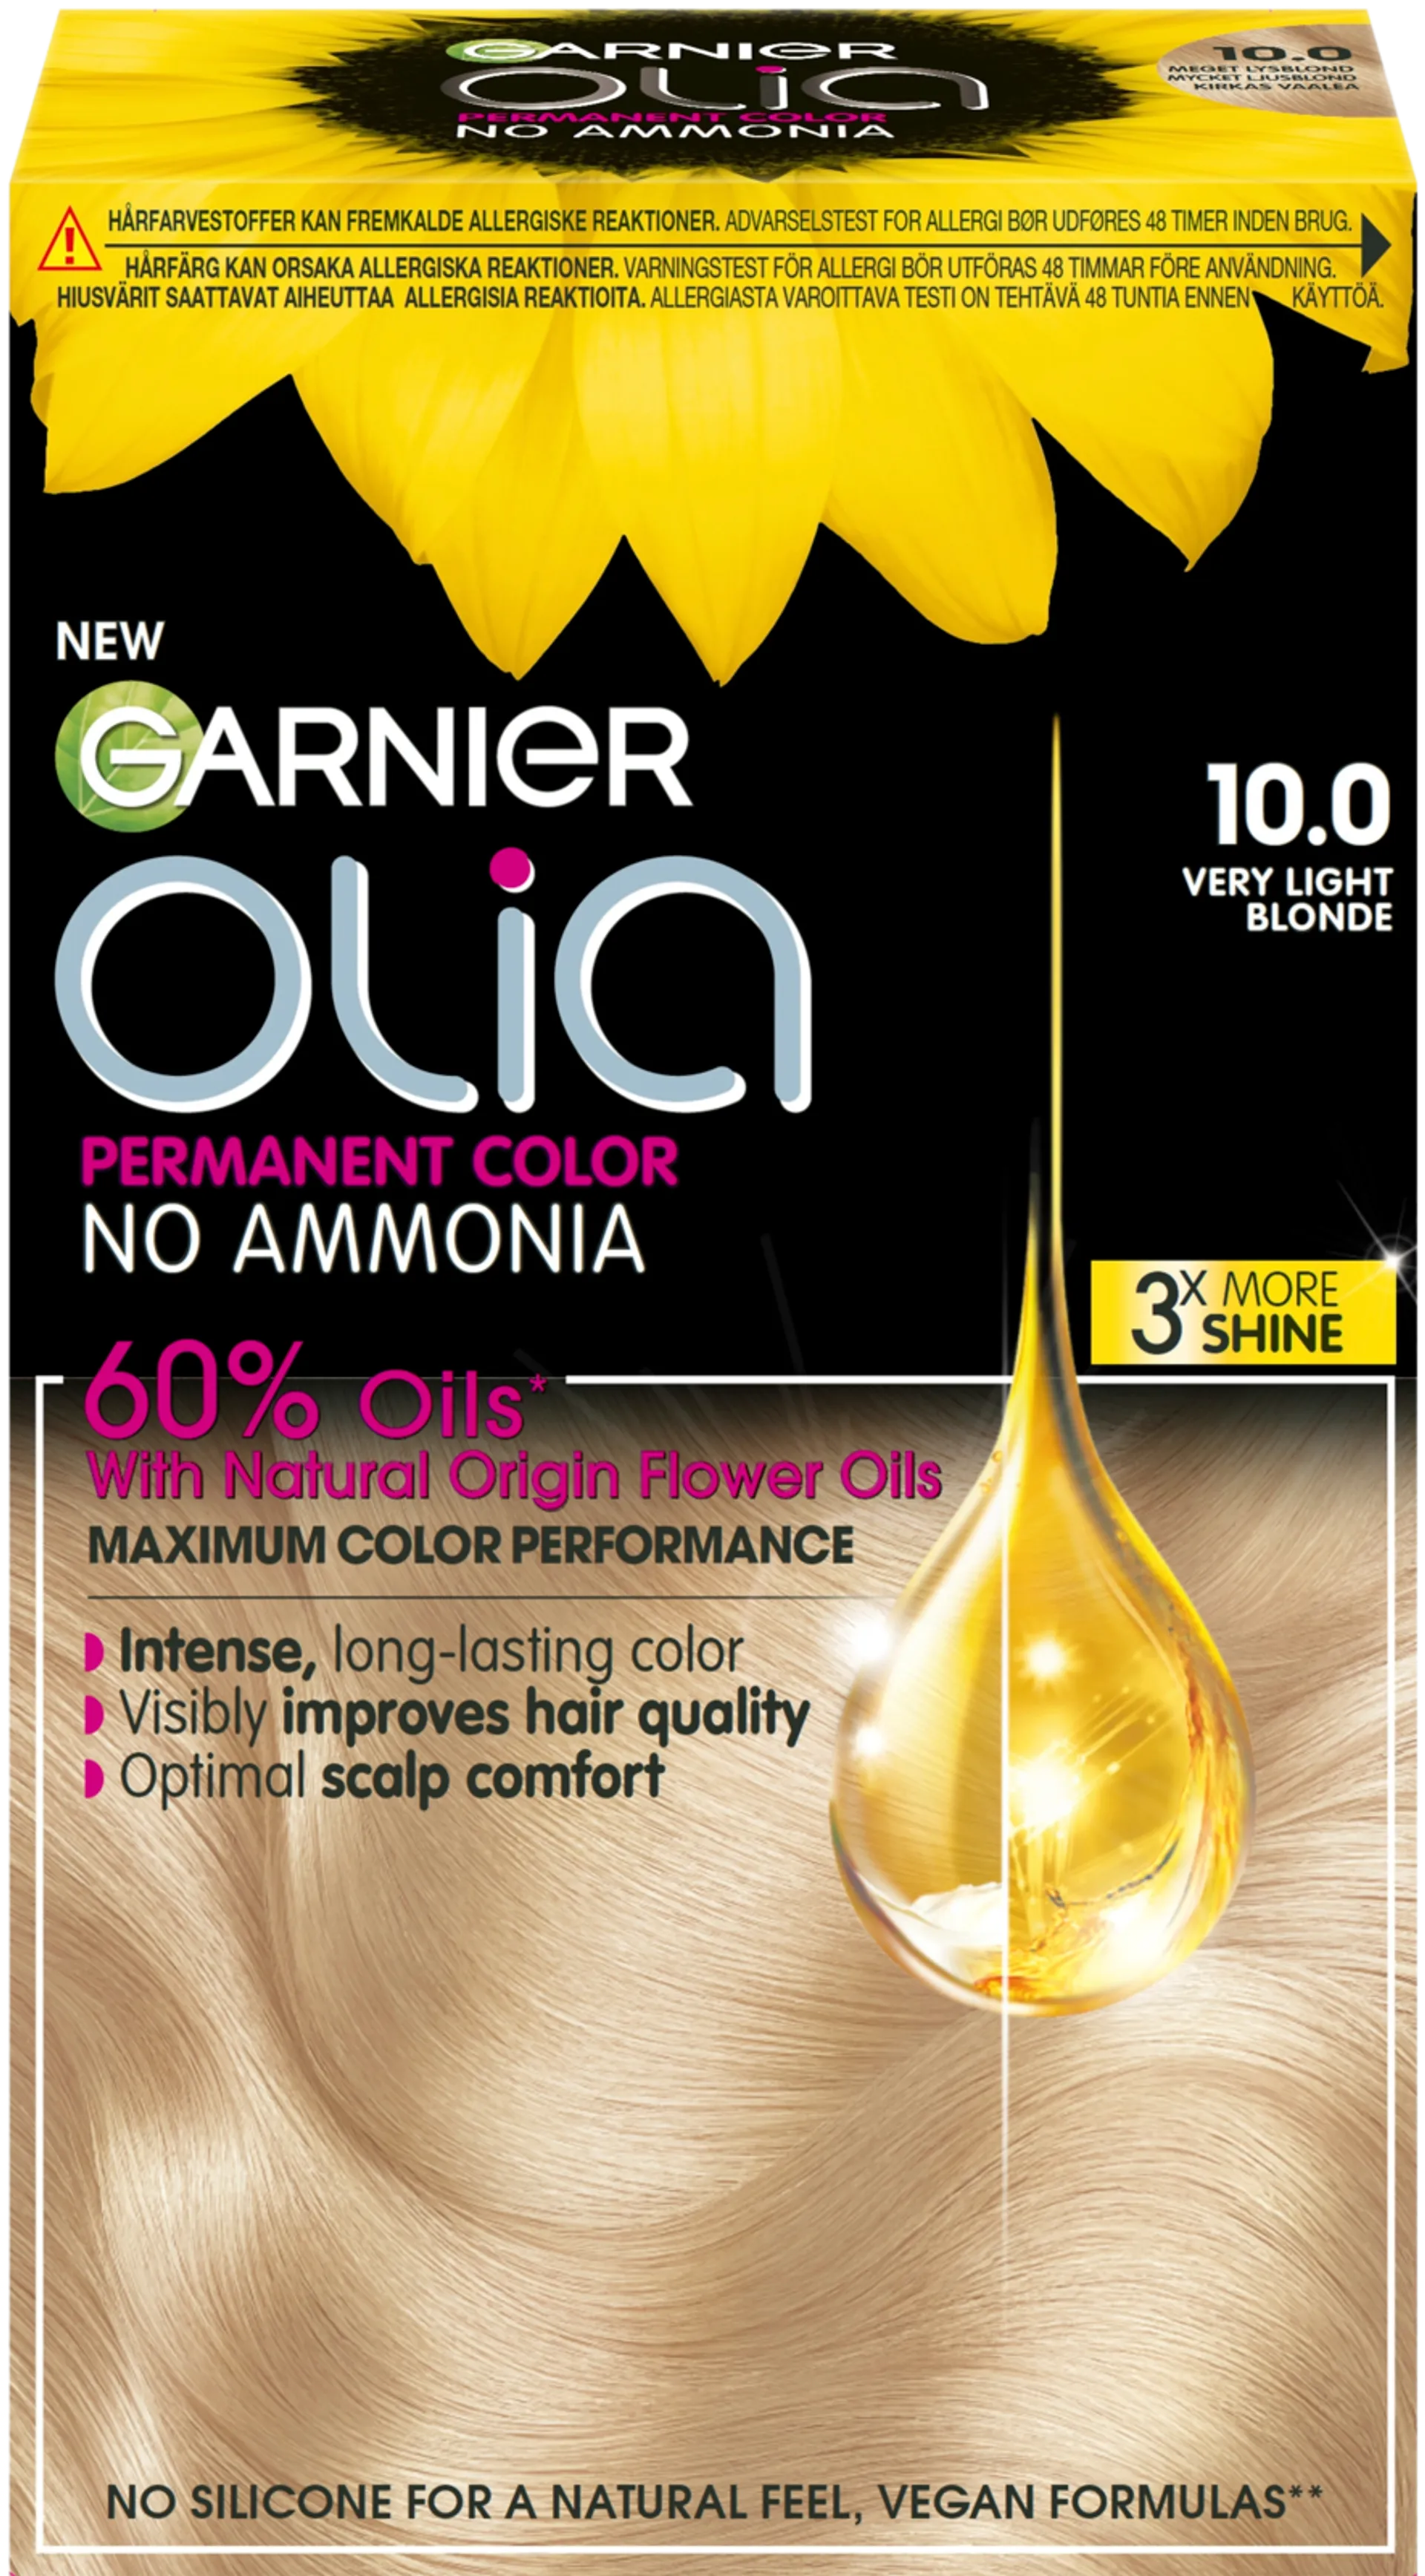 Garnier Olia 10.0 Very Light Blonde kestoväri 174ml - 1